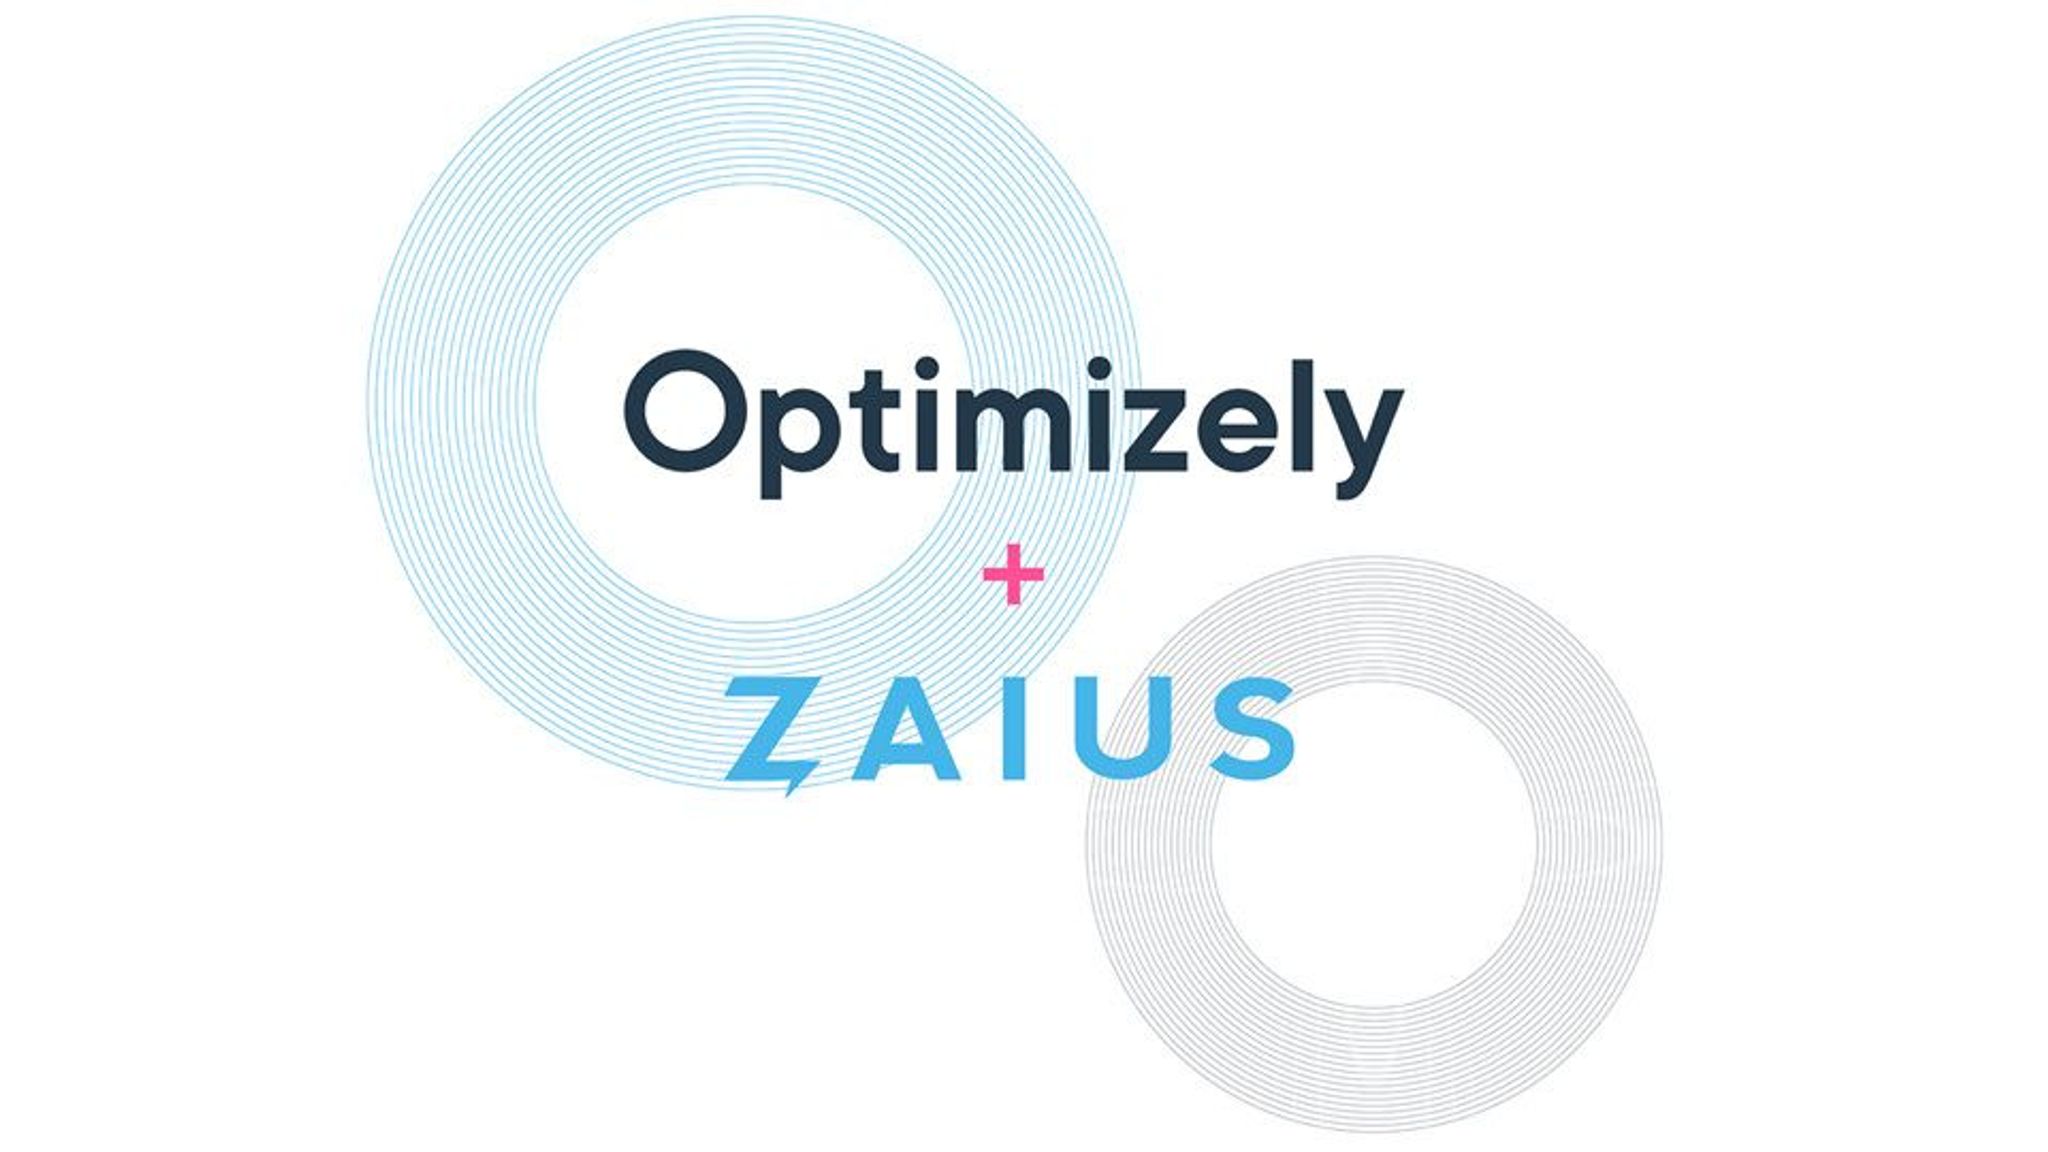 Optimizely and Zaius logos